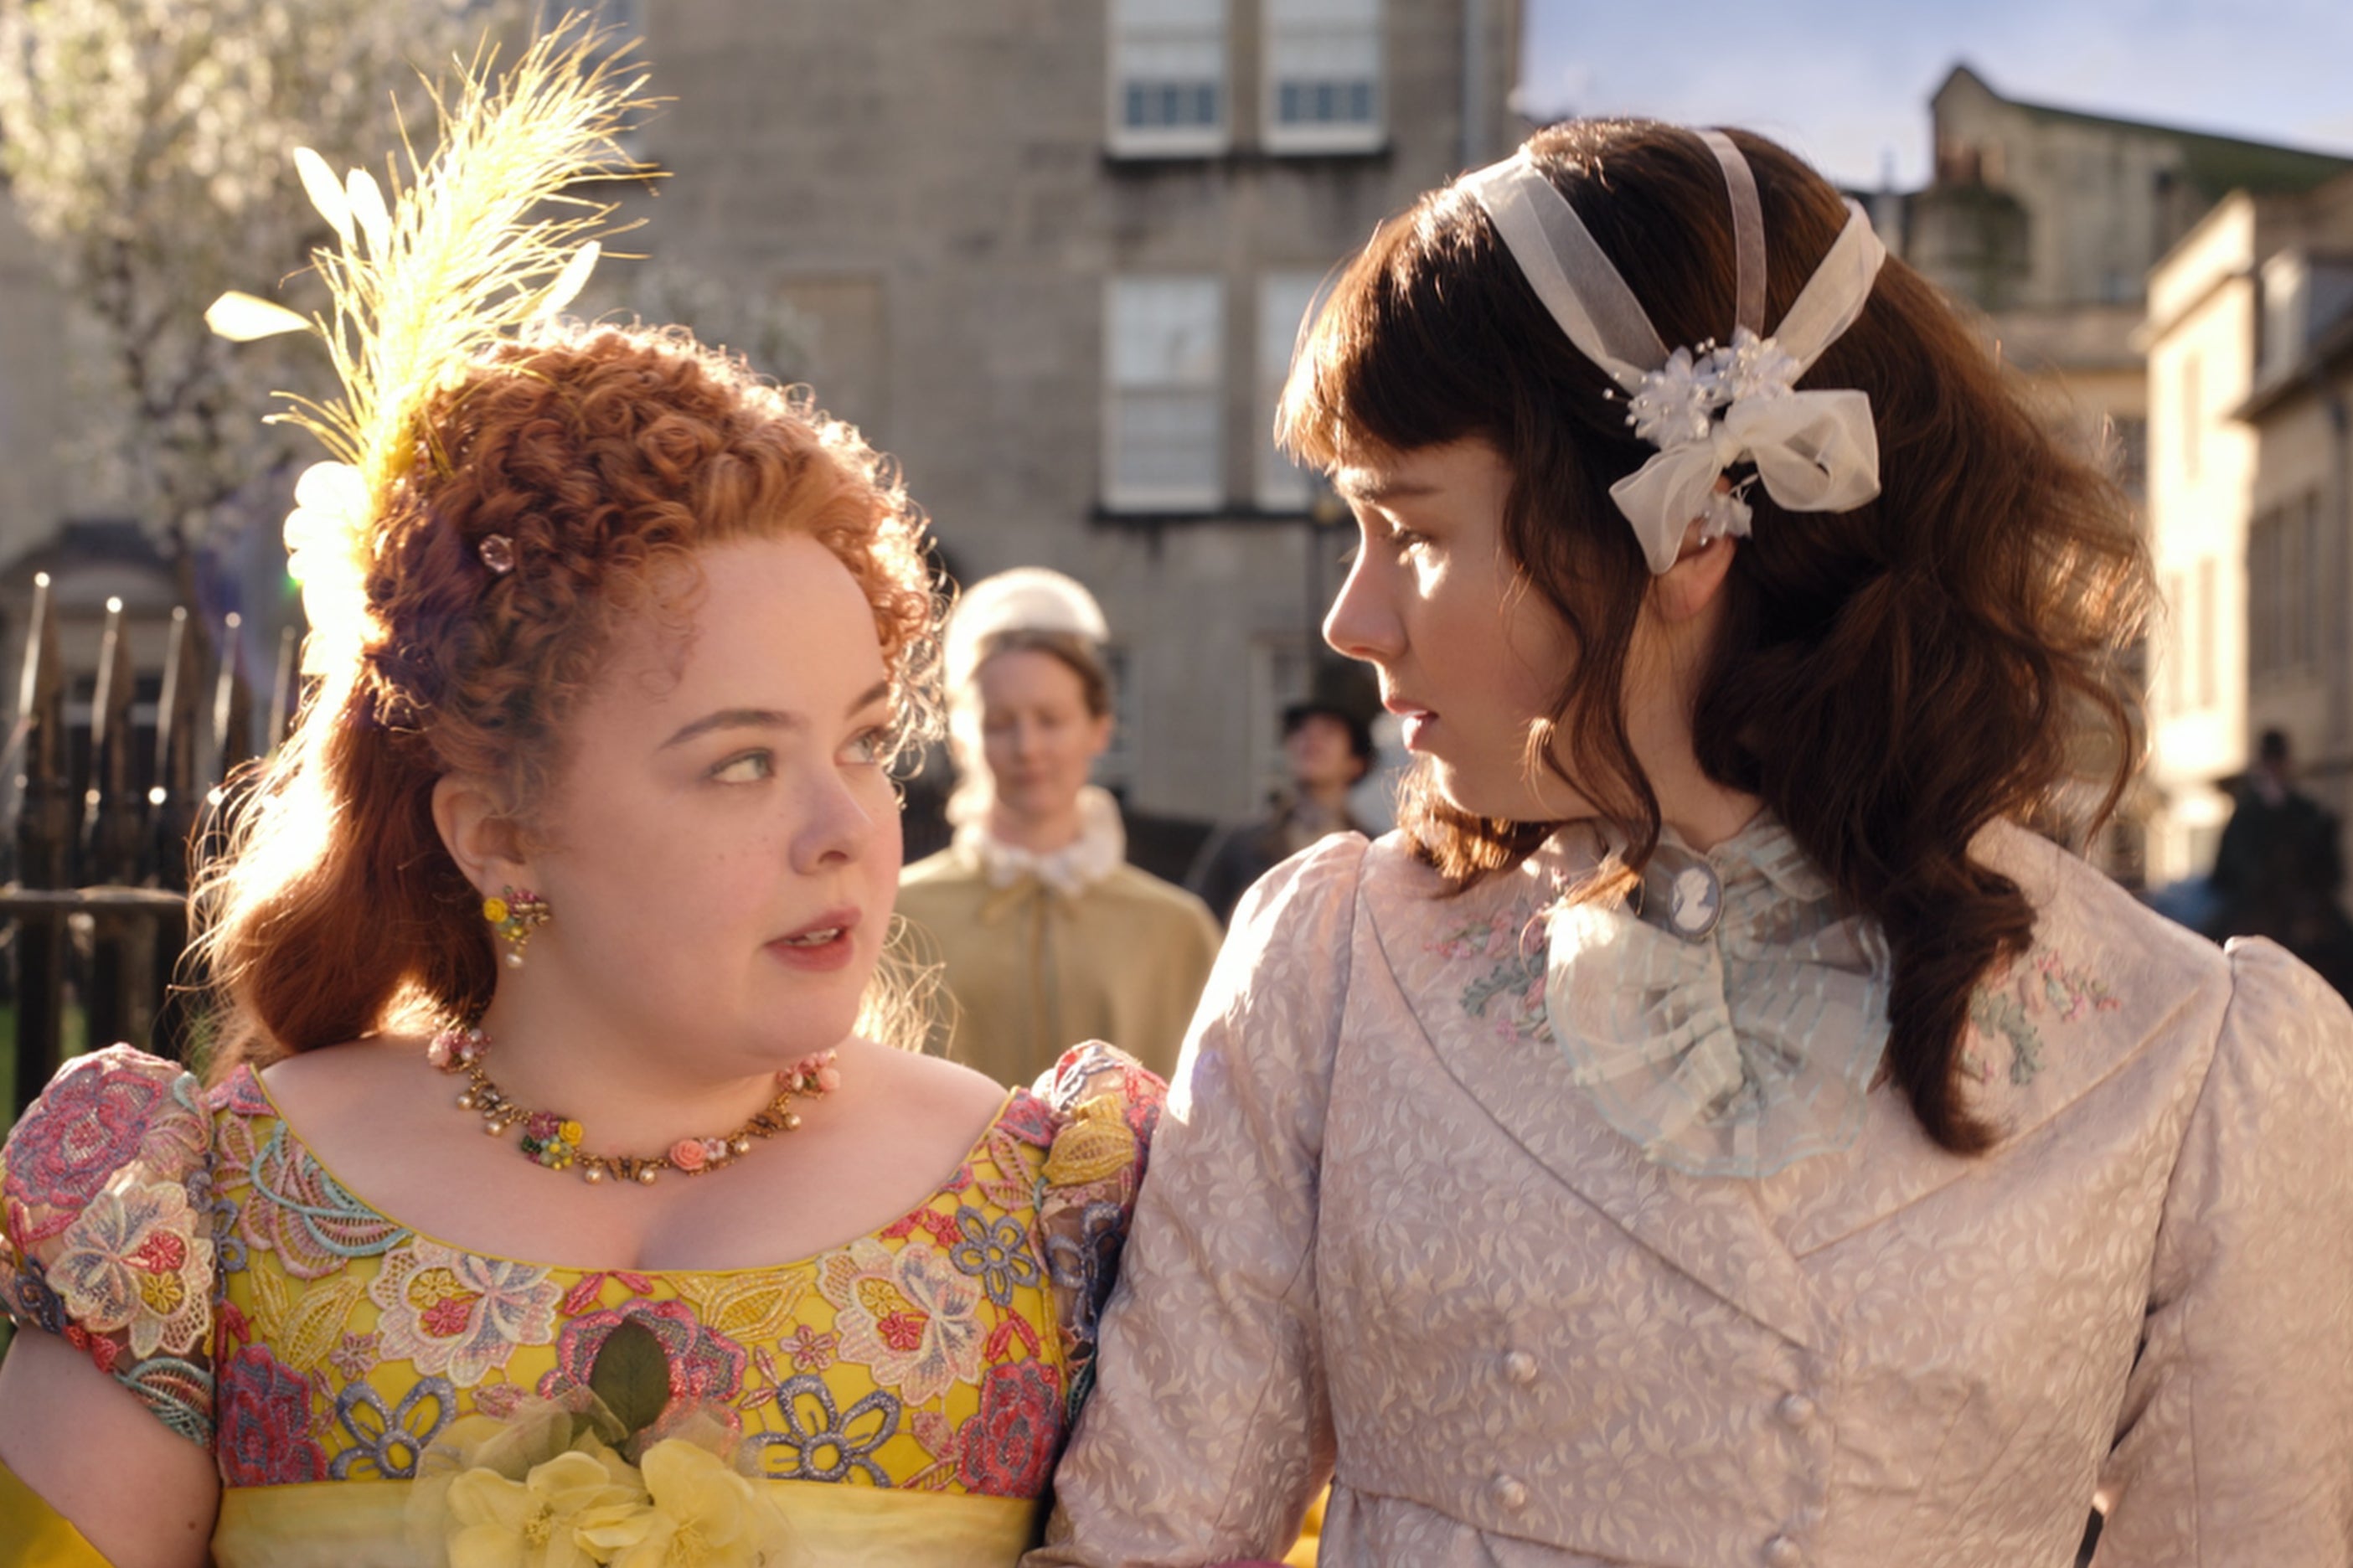 Friends to rivals: Penelope (Nicola Coughlan) and Eloise (Claudia Jessie) in ‘Bridgerton’